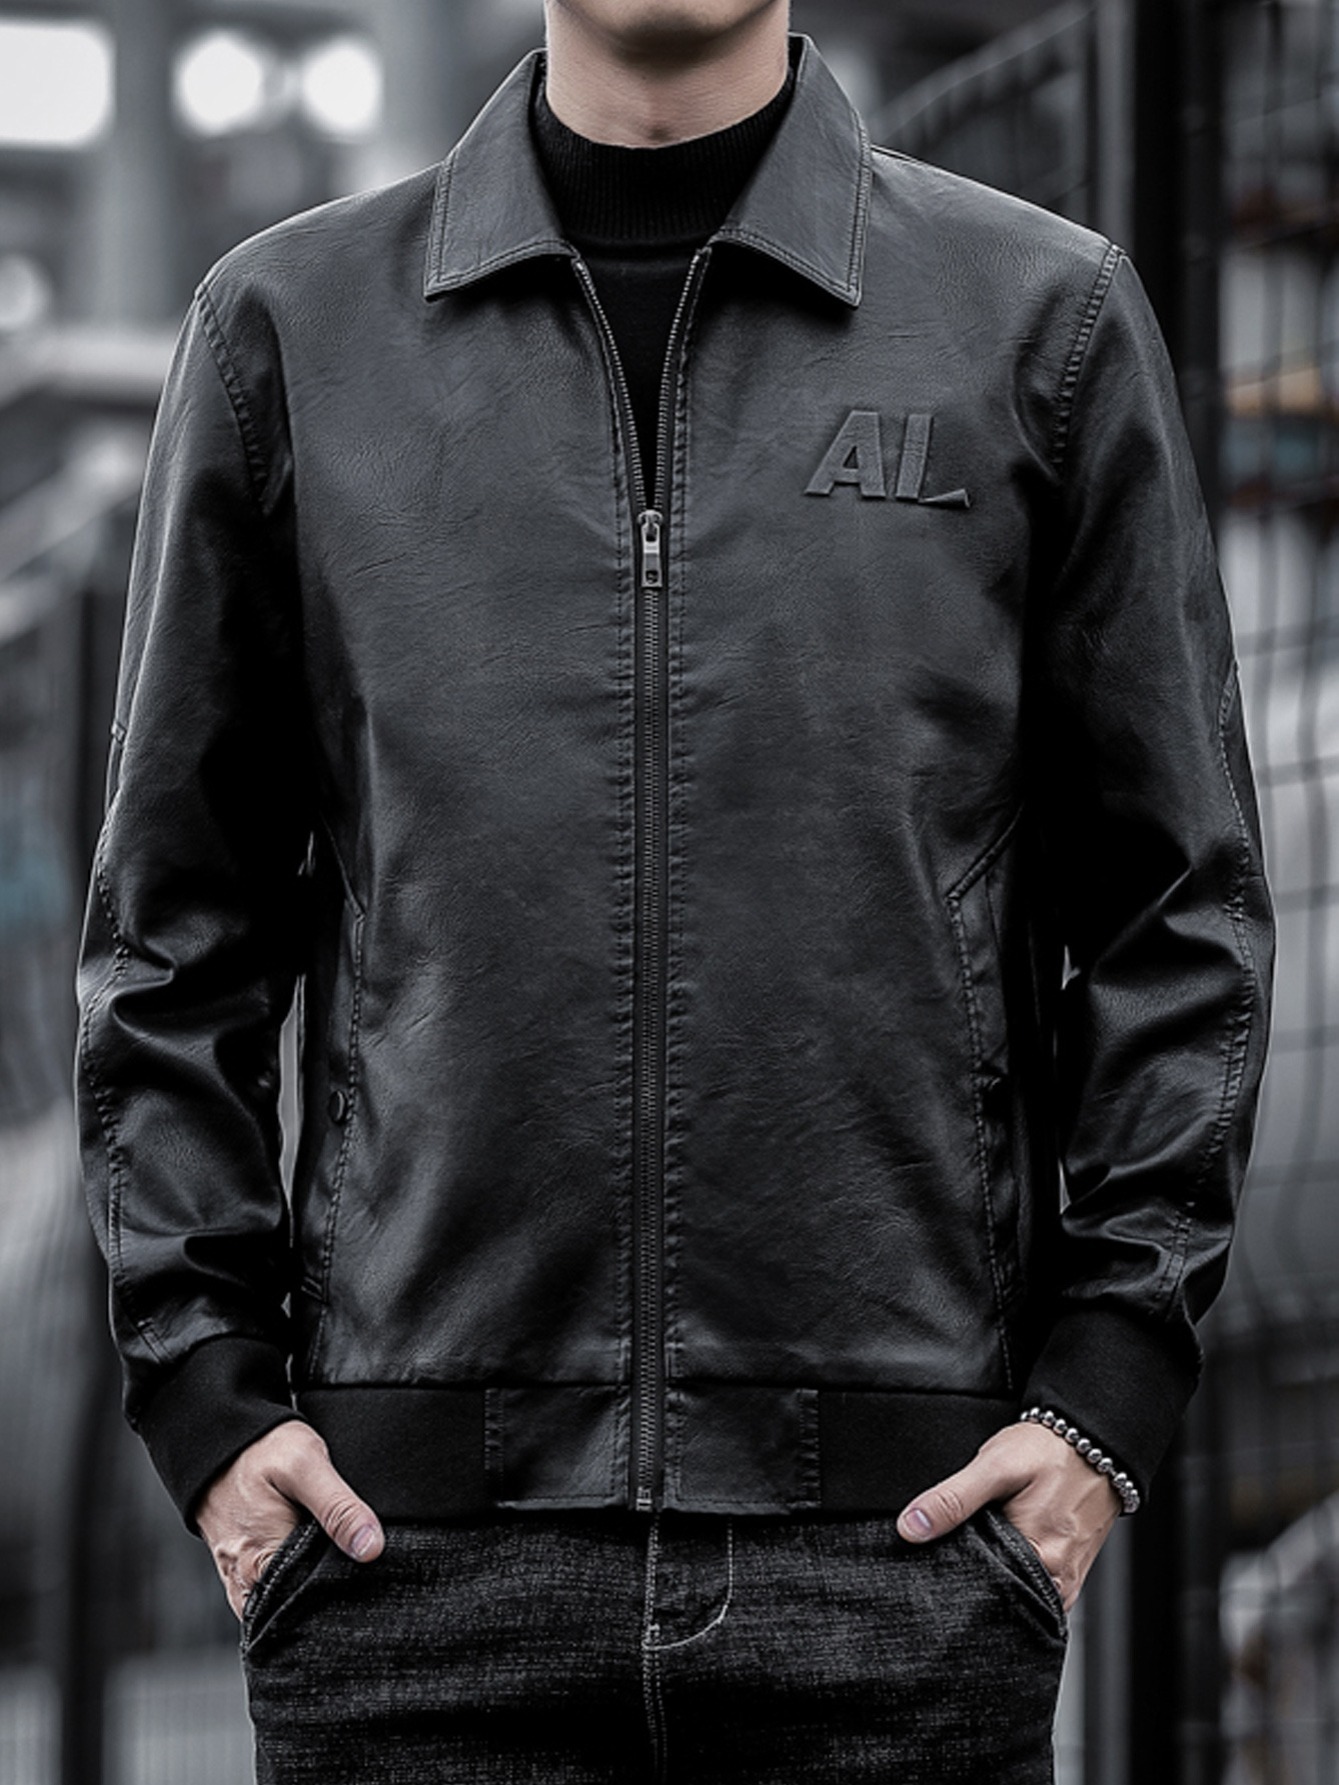 Armani Exchange Men's Faux Leather Jacket - Black - Leather Jackets